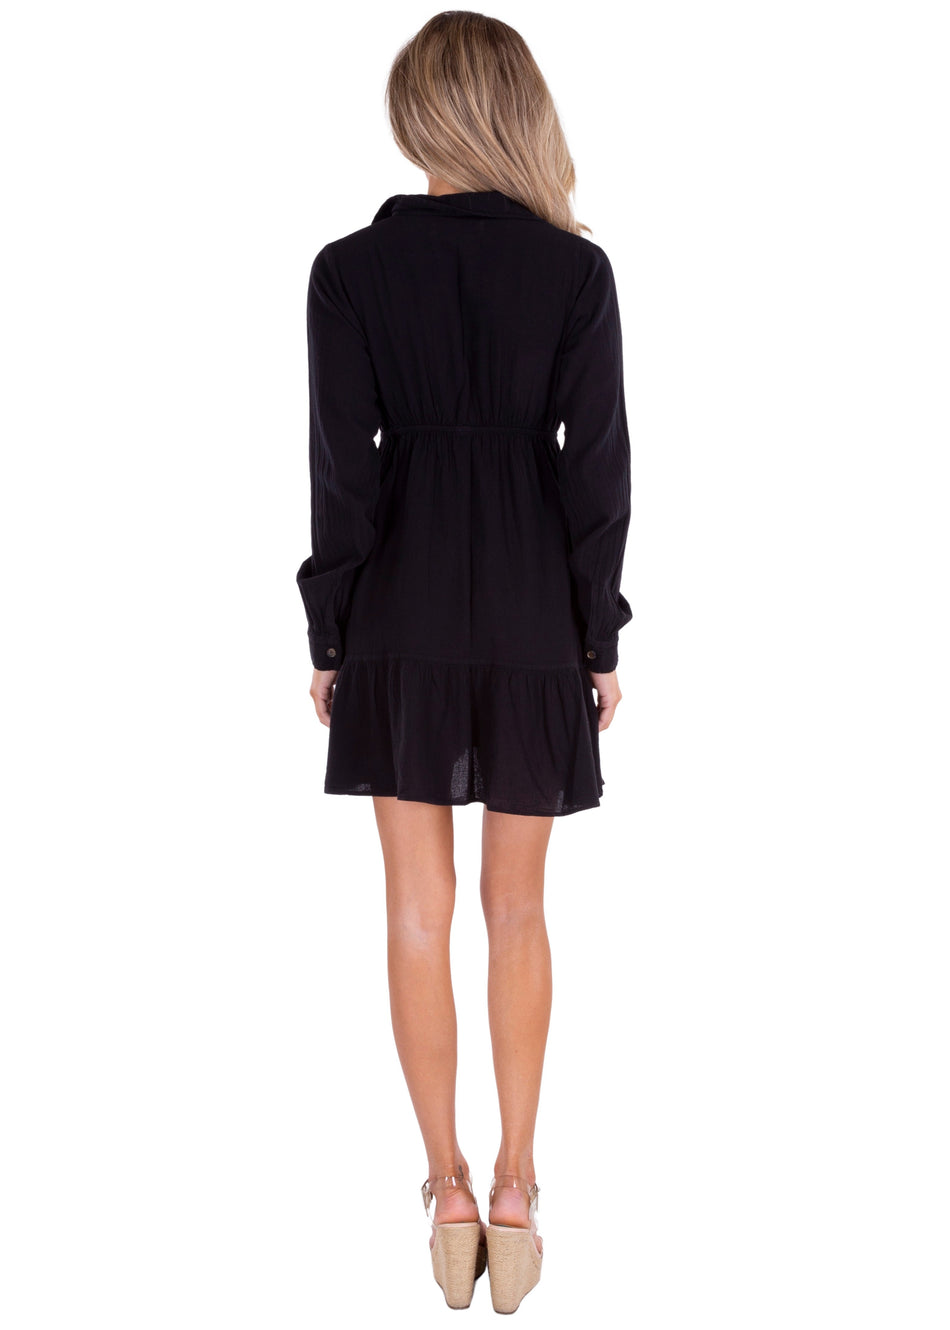 NW1426 - Black Cotton Tunic Dress